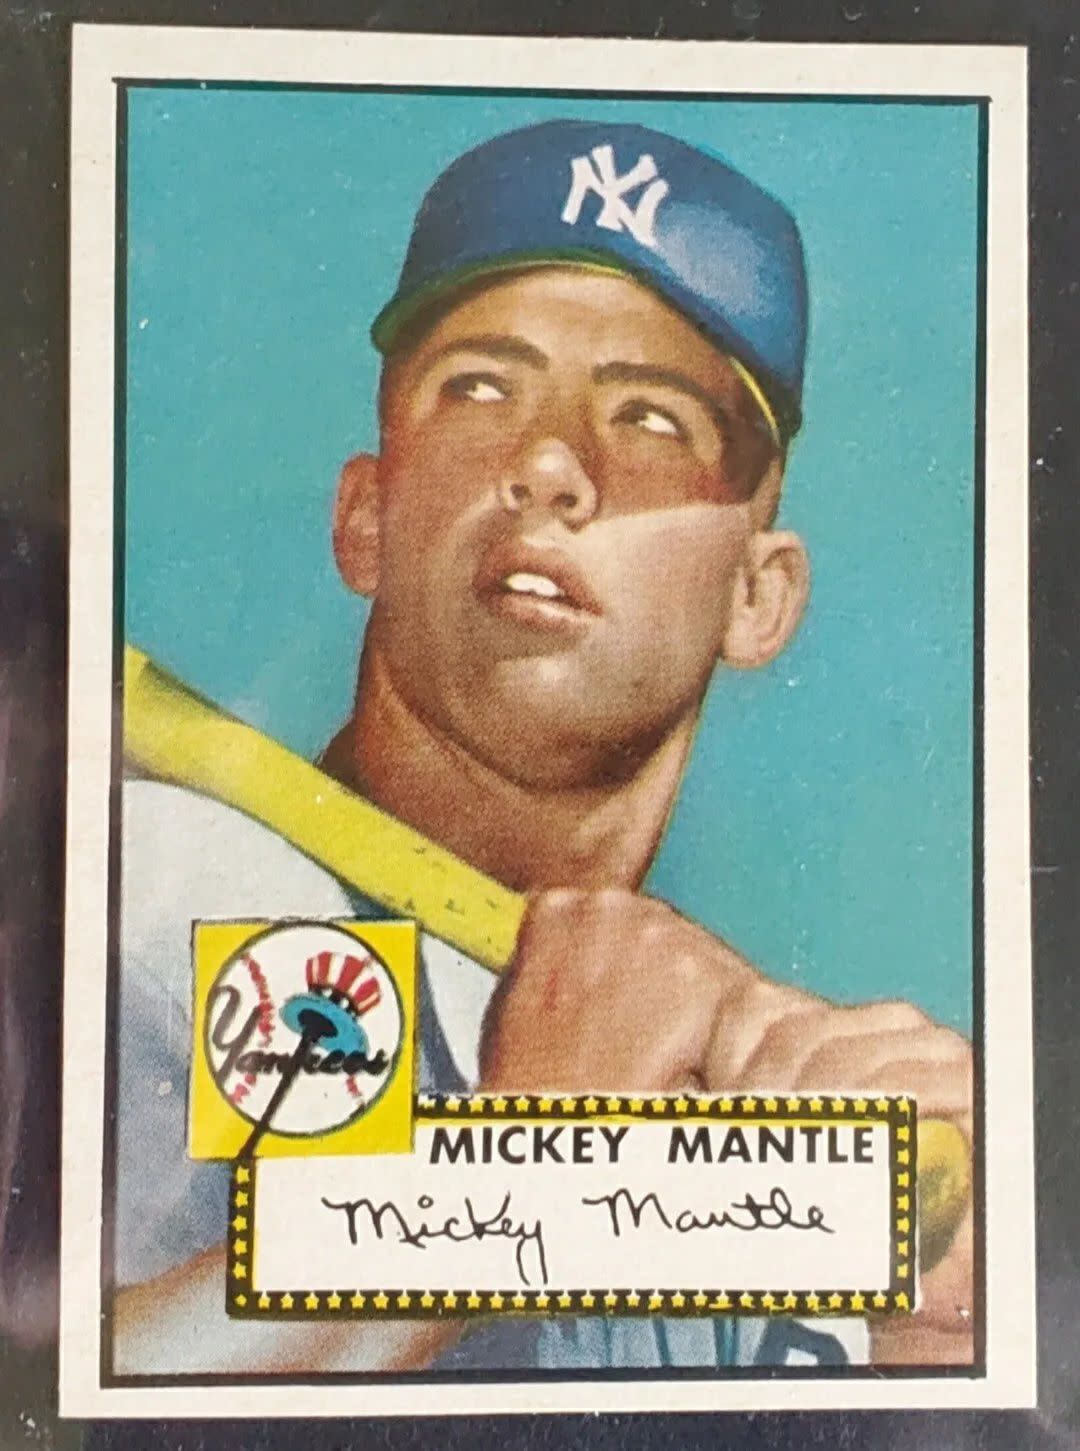 A rare Mickey Mantle card.